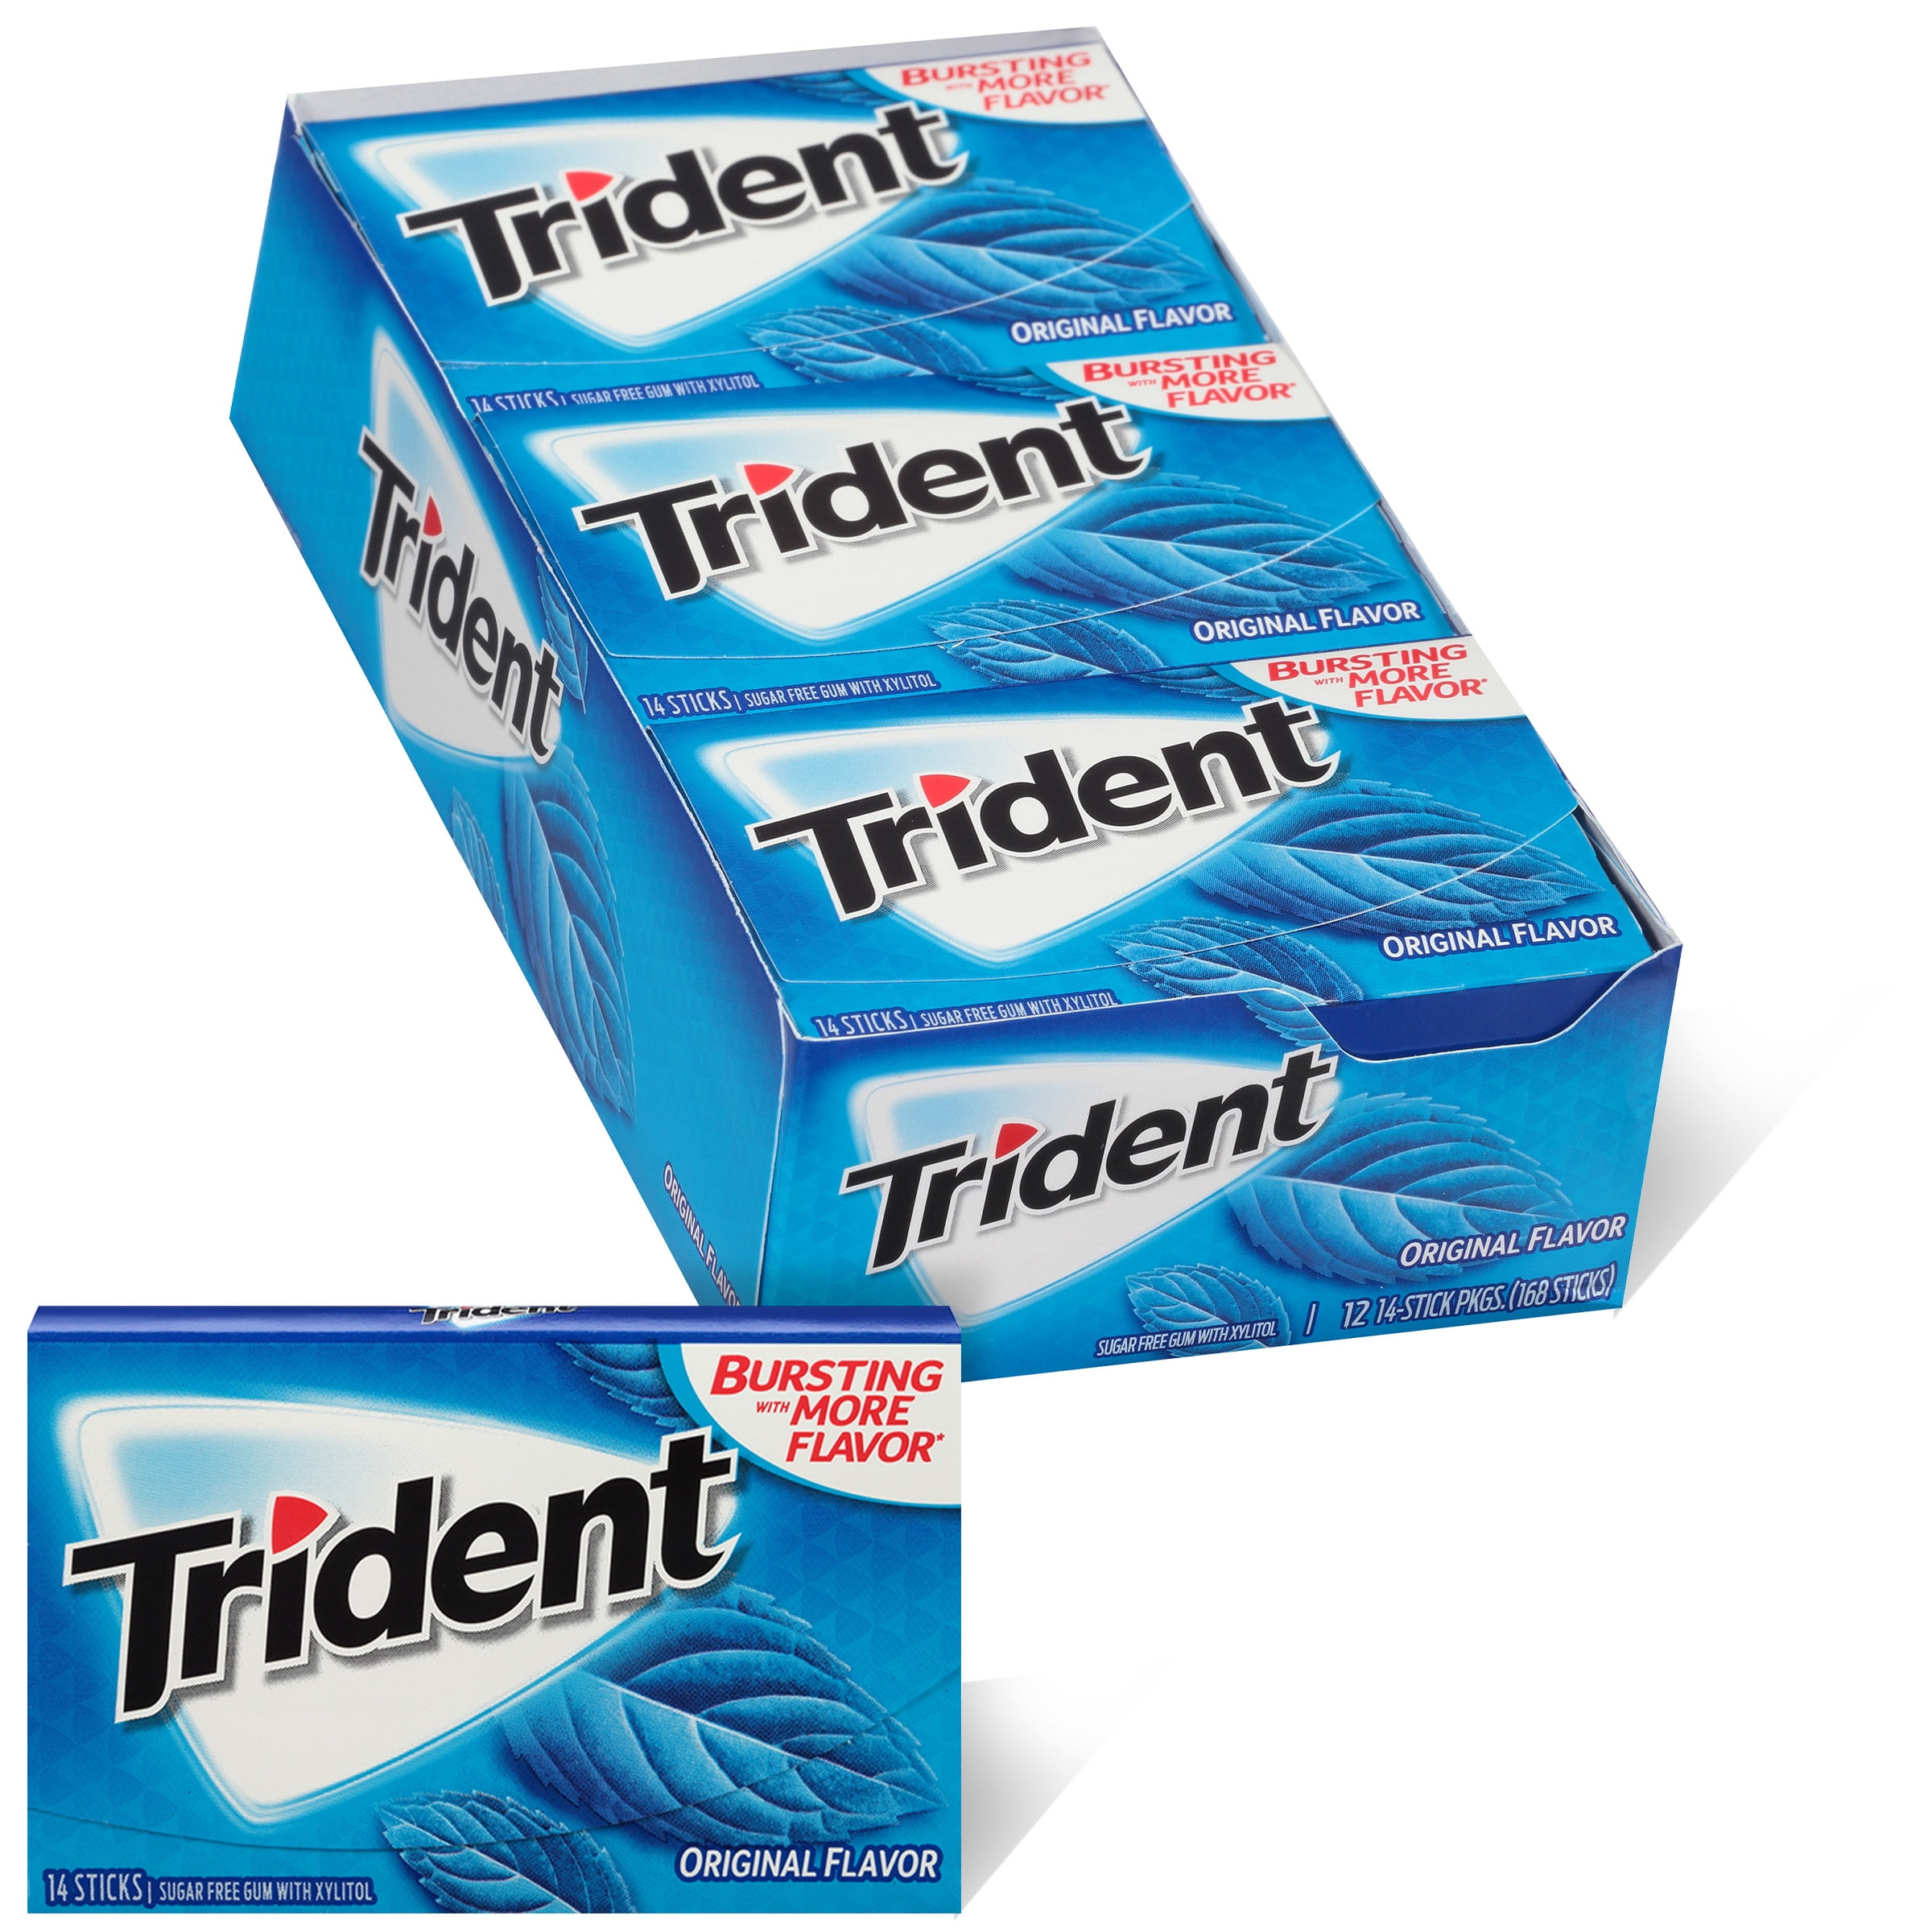 Trident Flavor Sugar Free Gum, 12 Packs of Pieces (168 Total Pieces) -